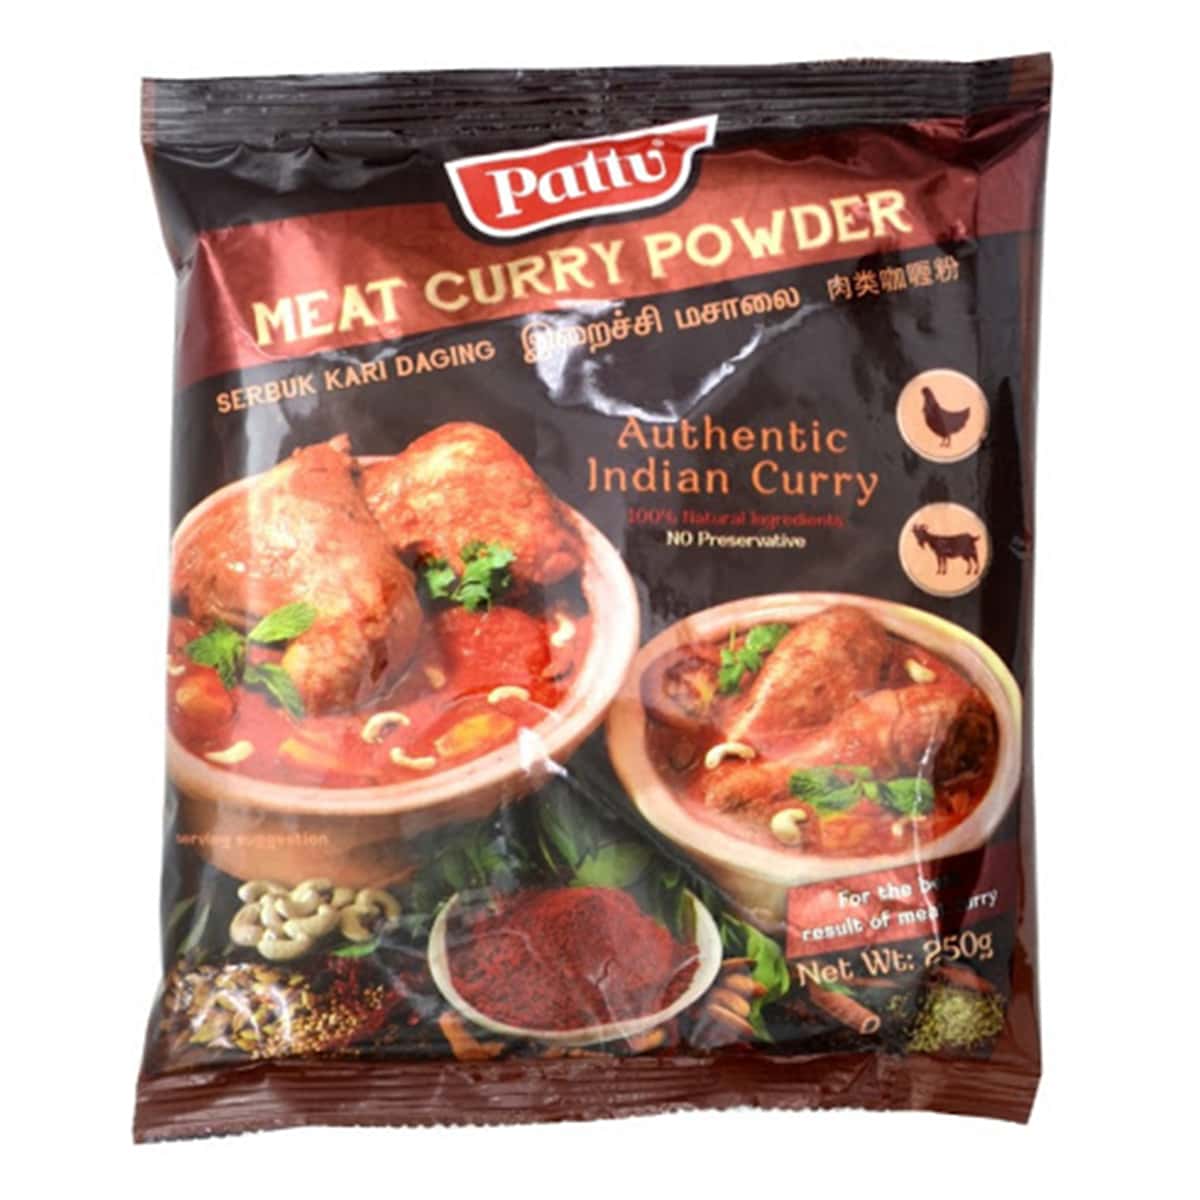 Buy Pattu Meat Curry Powder (Serbuk Kari Daging) - 250 gm